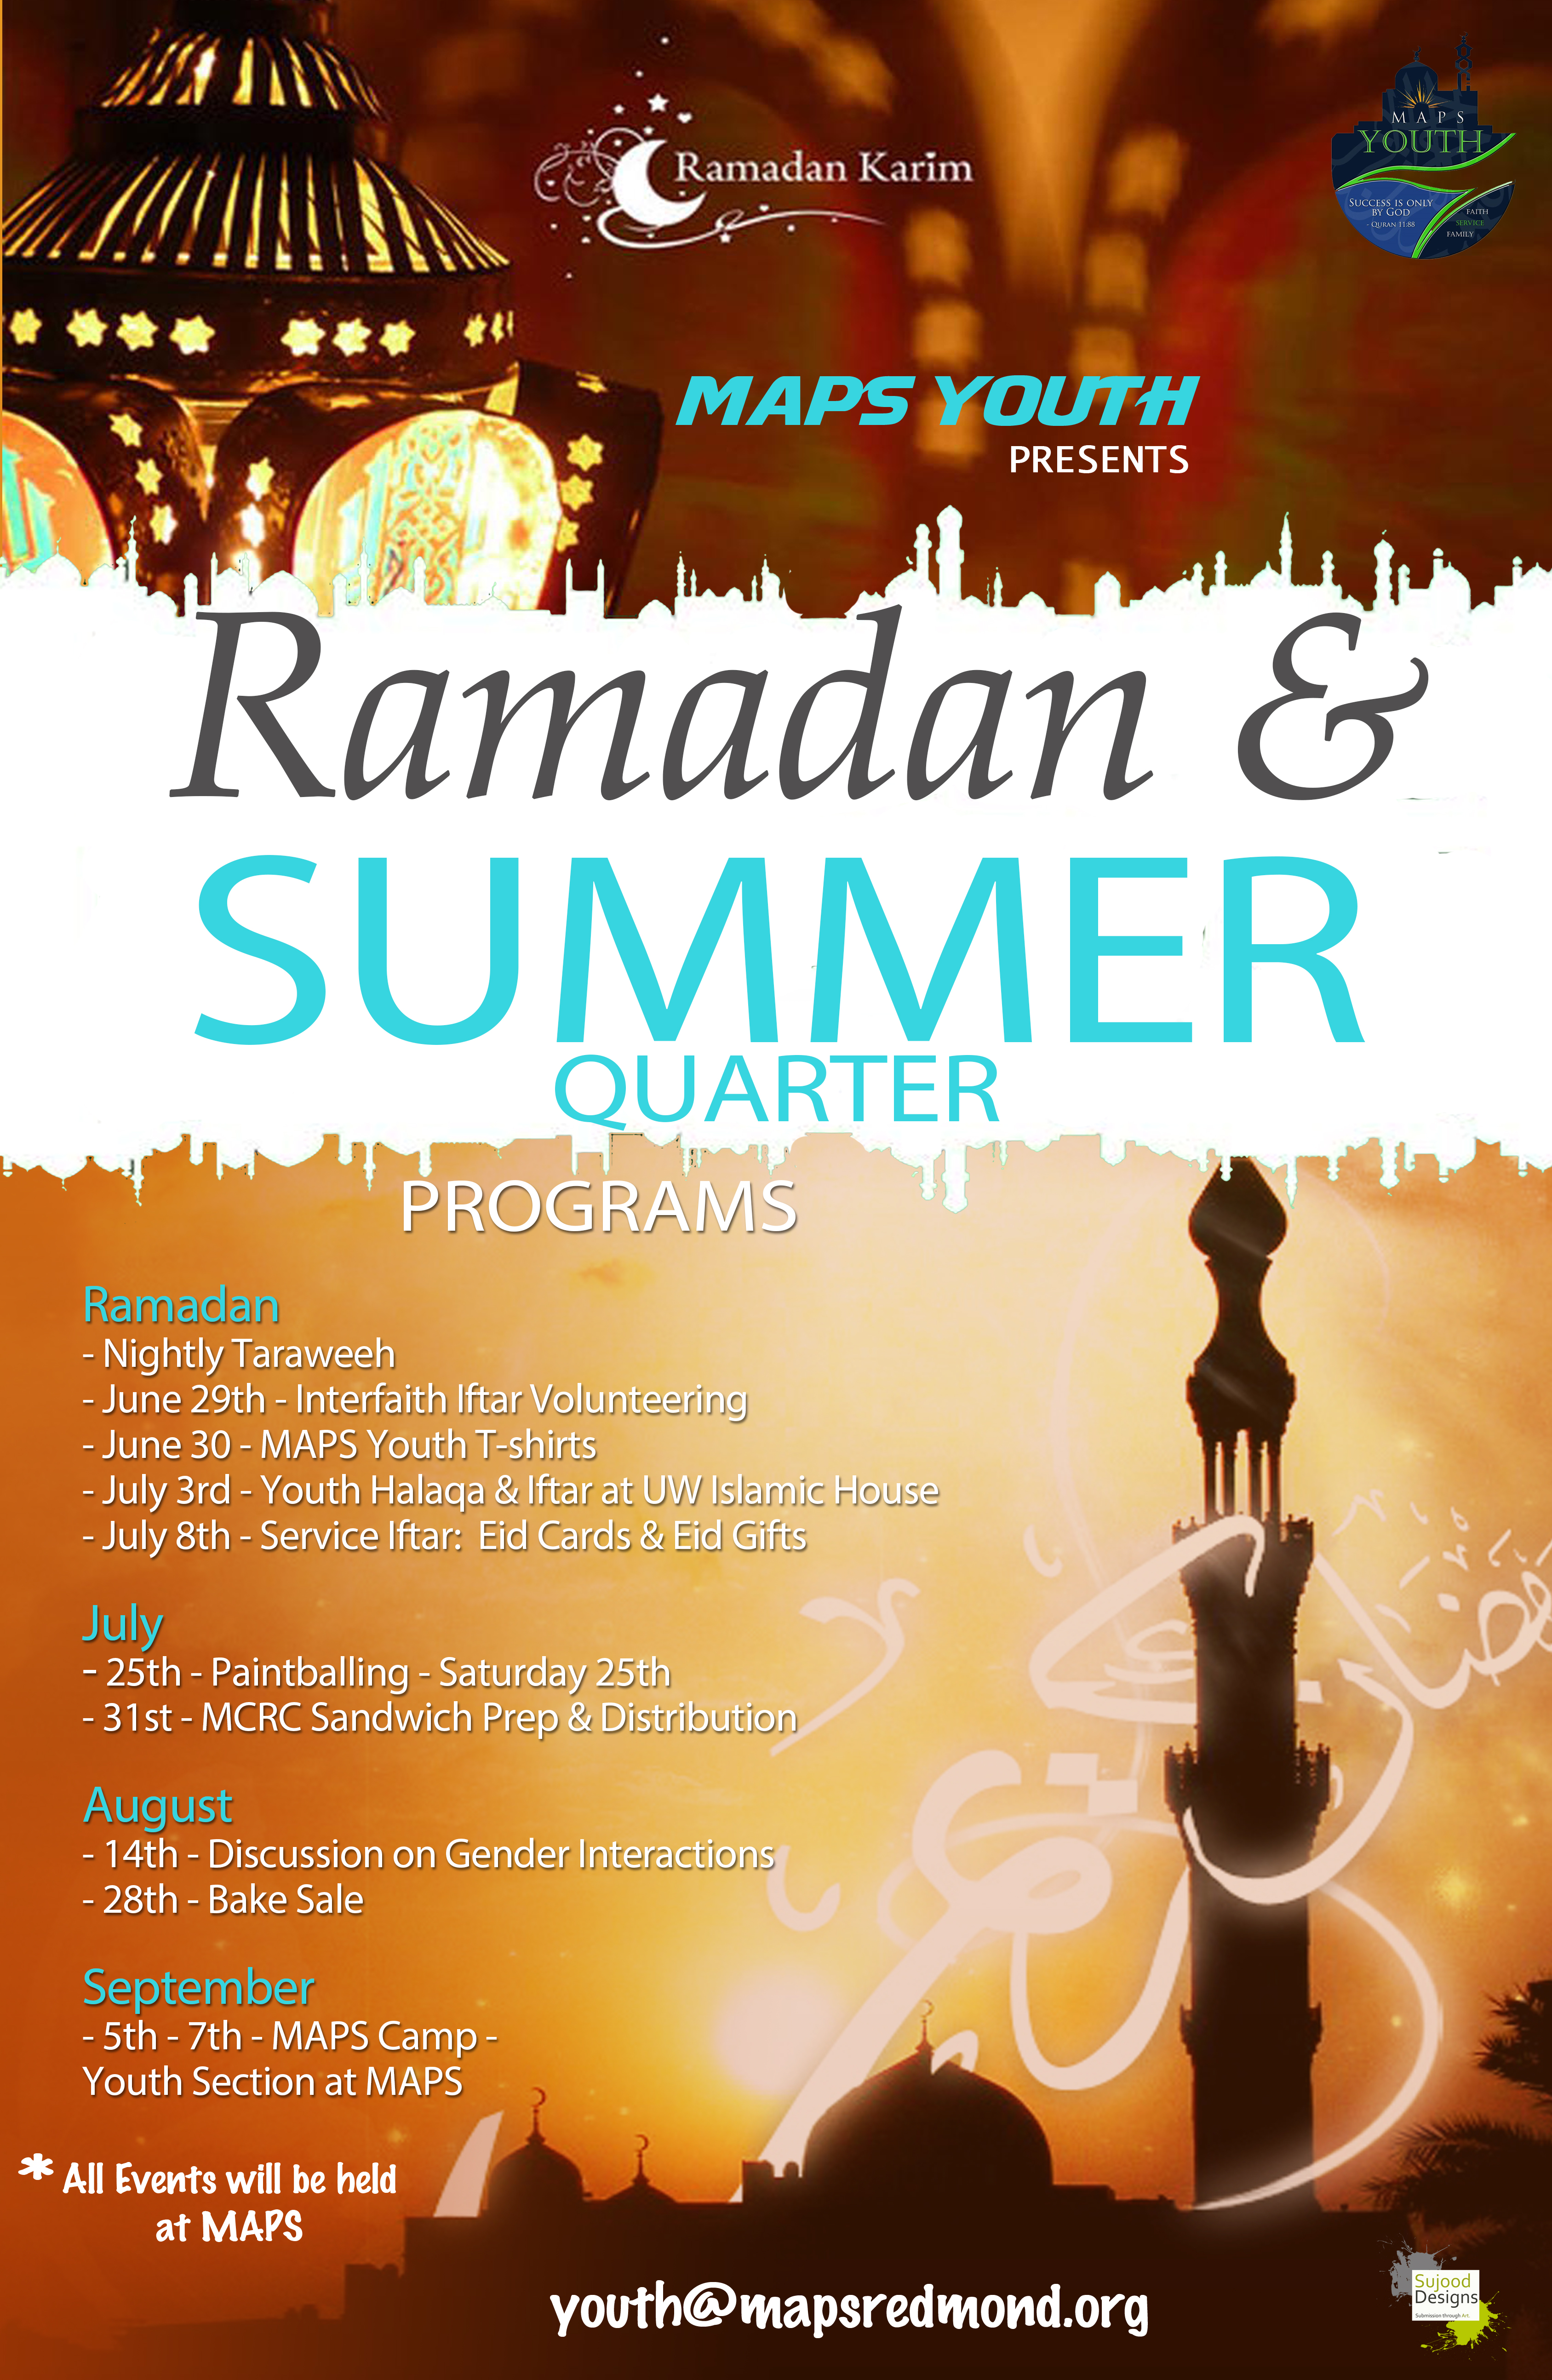 MAPS Youth Ramadan & Summer Quarter Activities  Muslim 